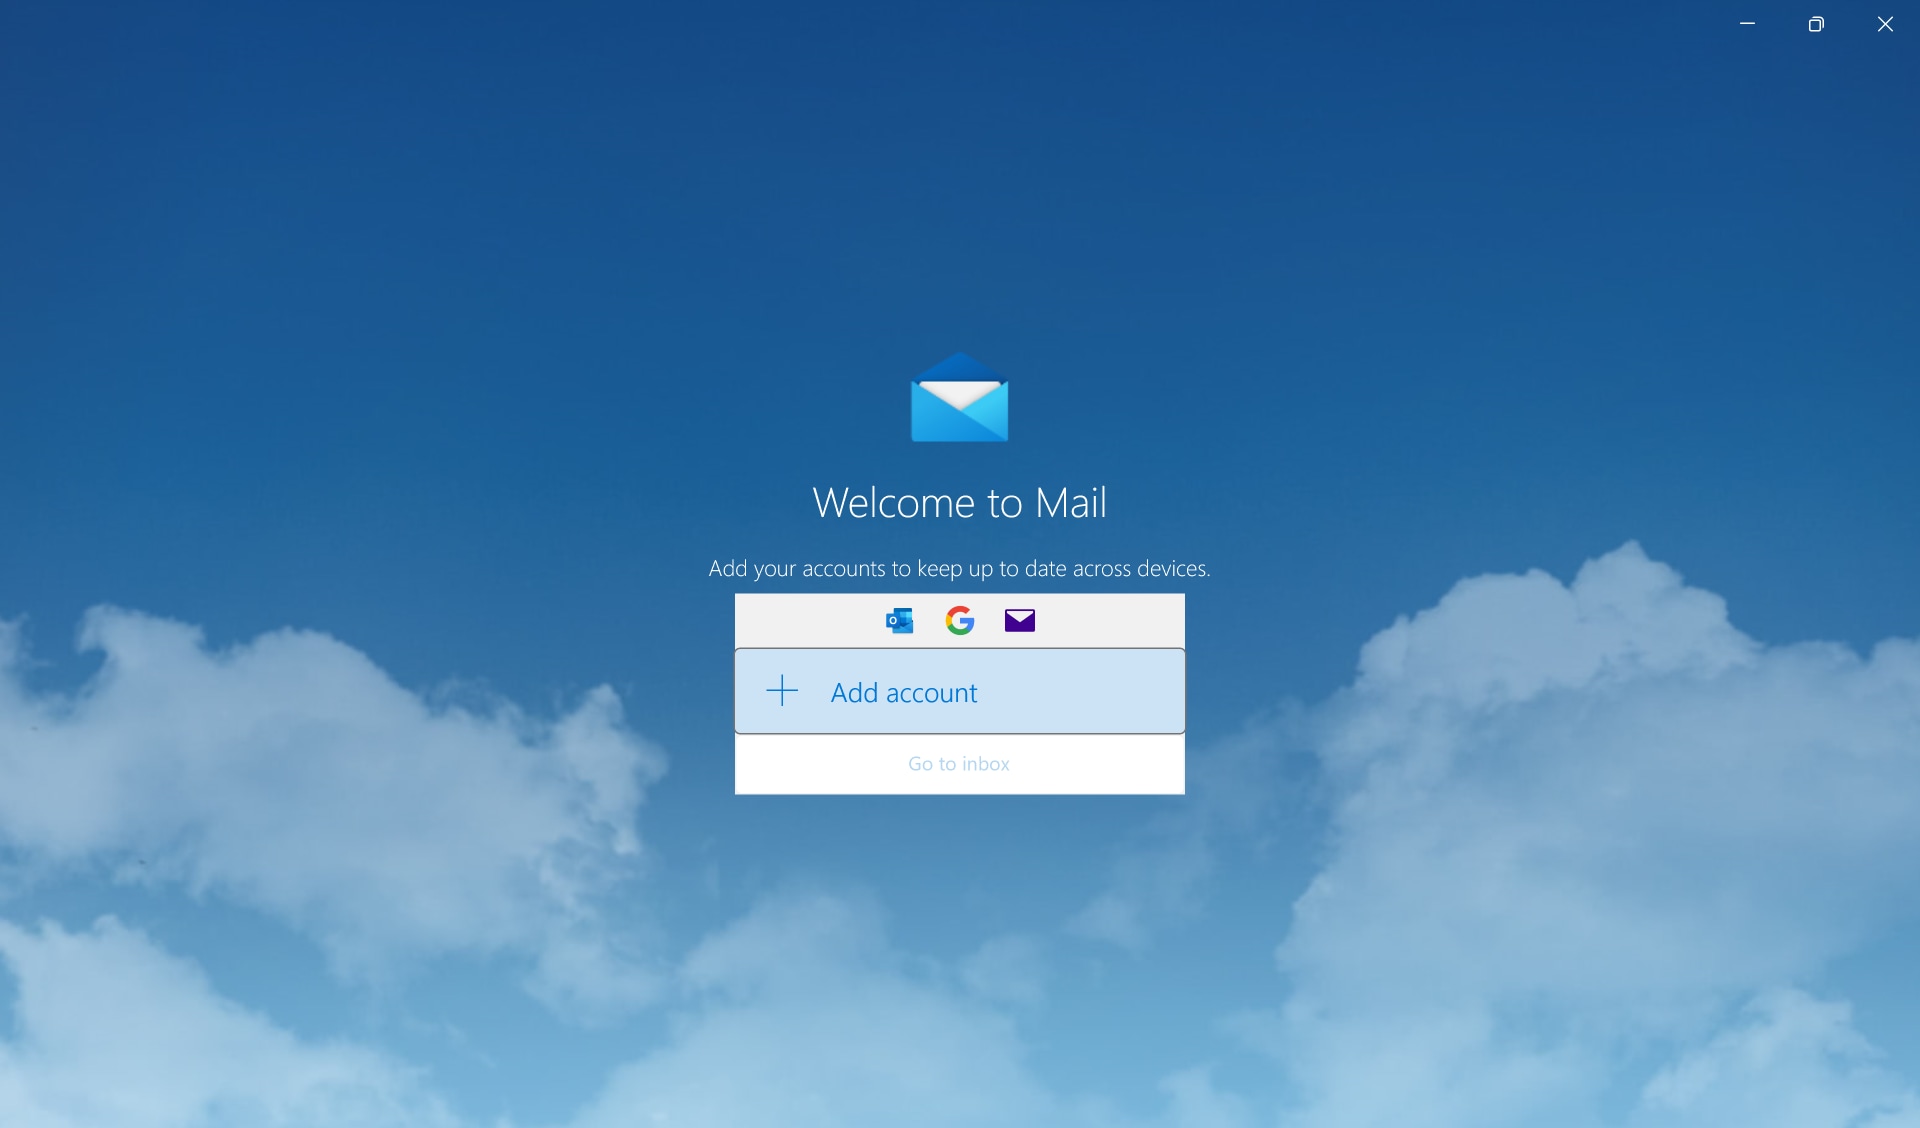 Accountknop toevoegen aan de E-mail-app in Windows